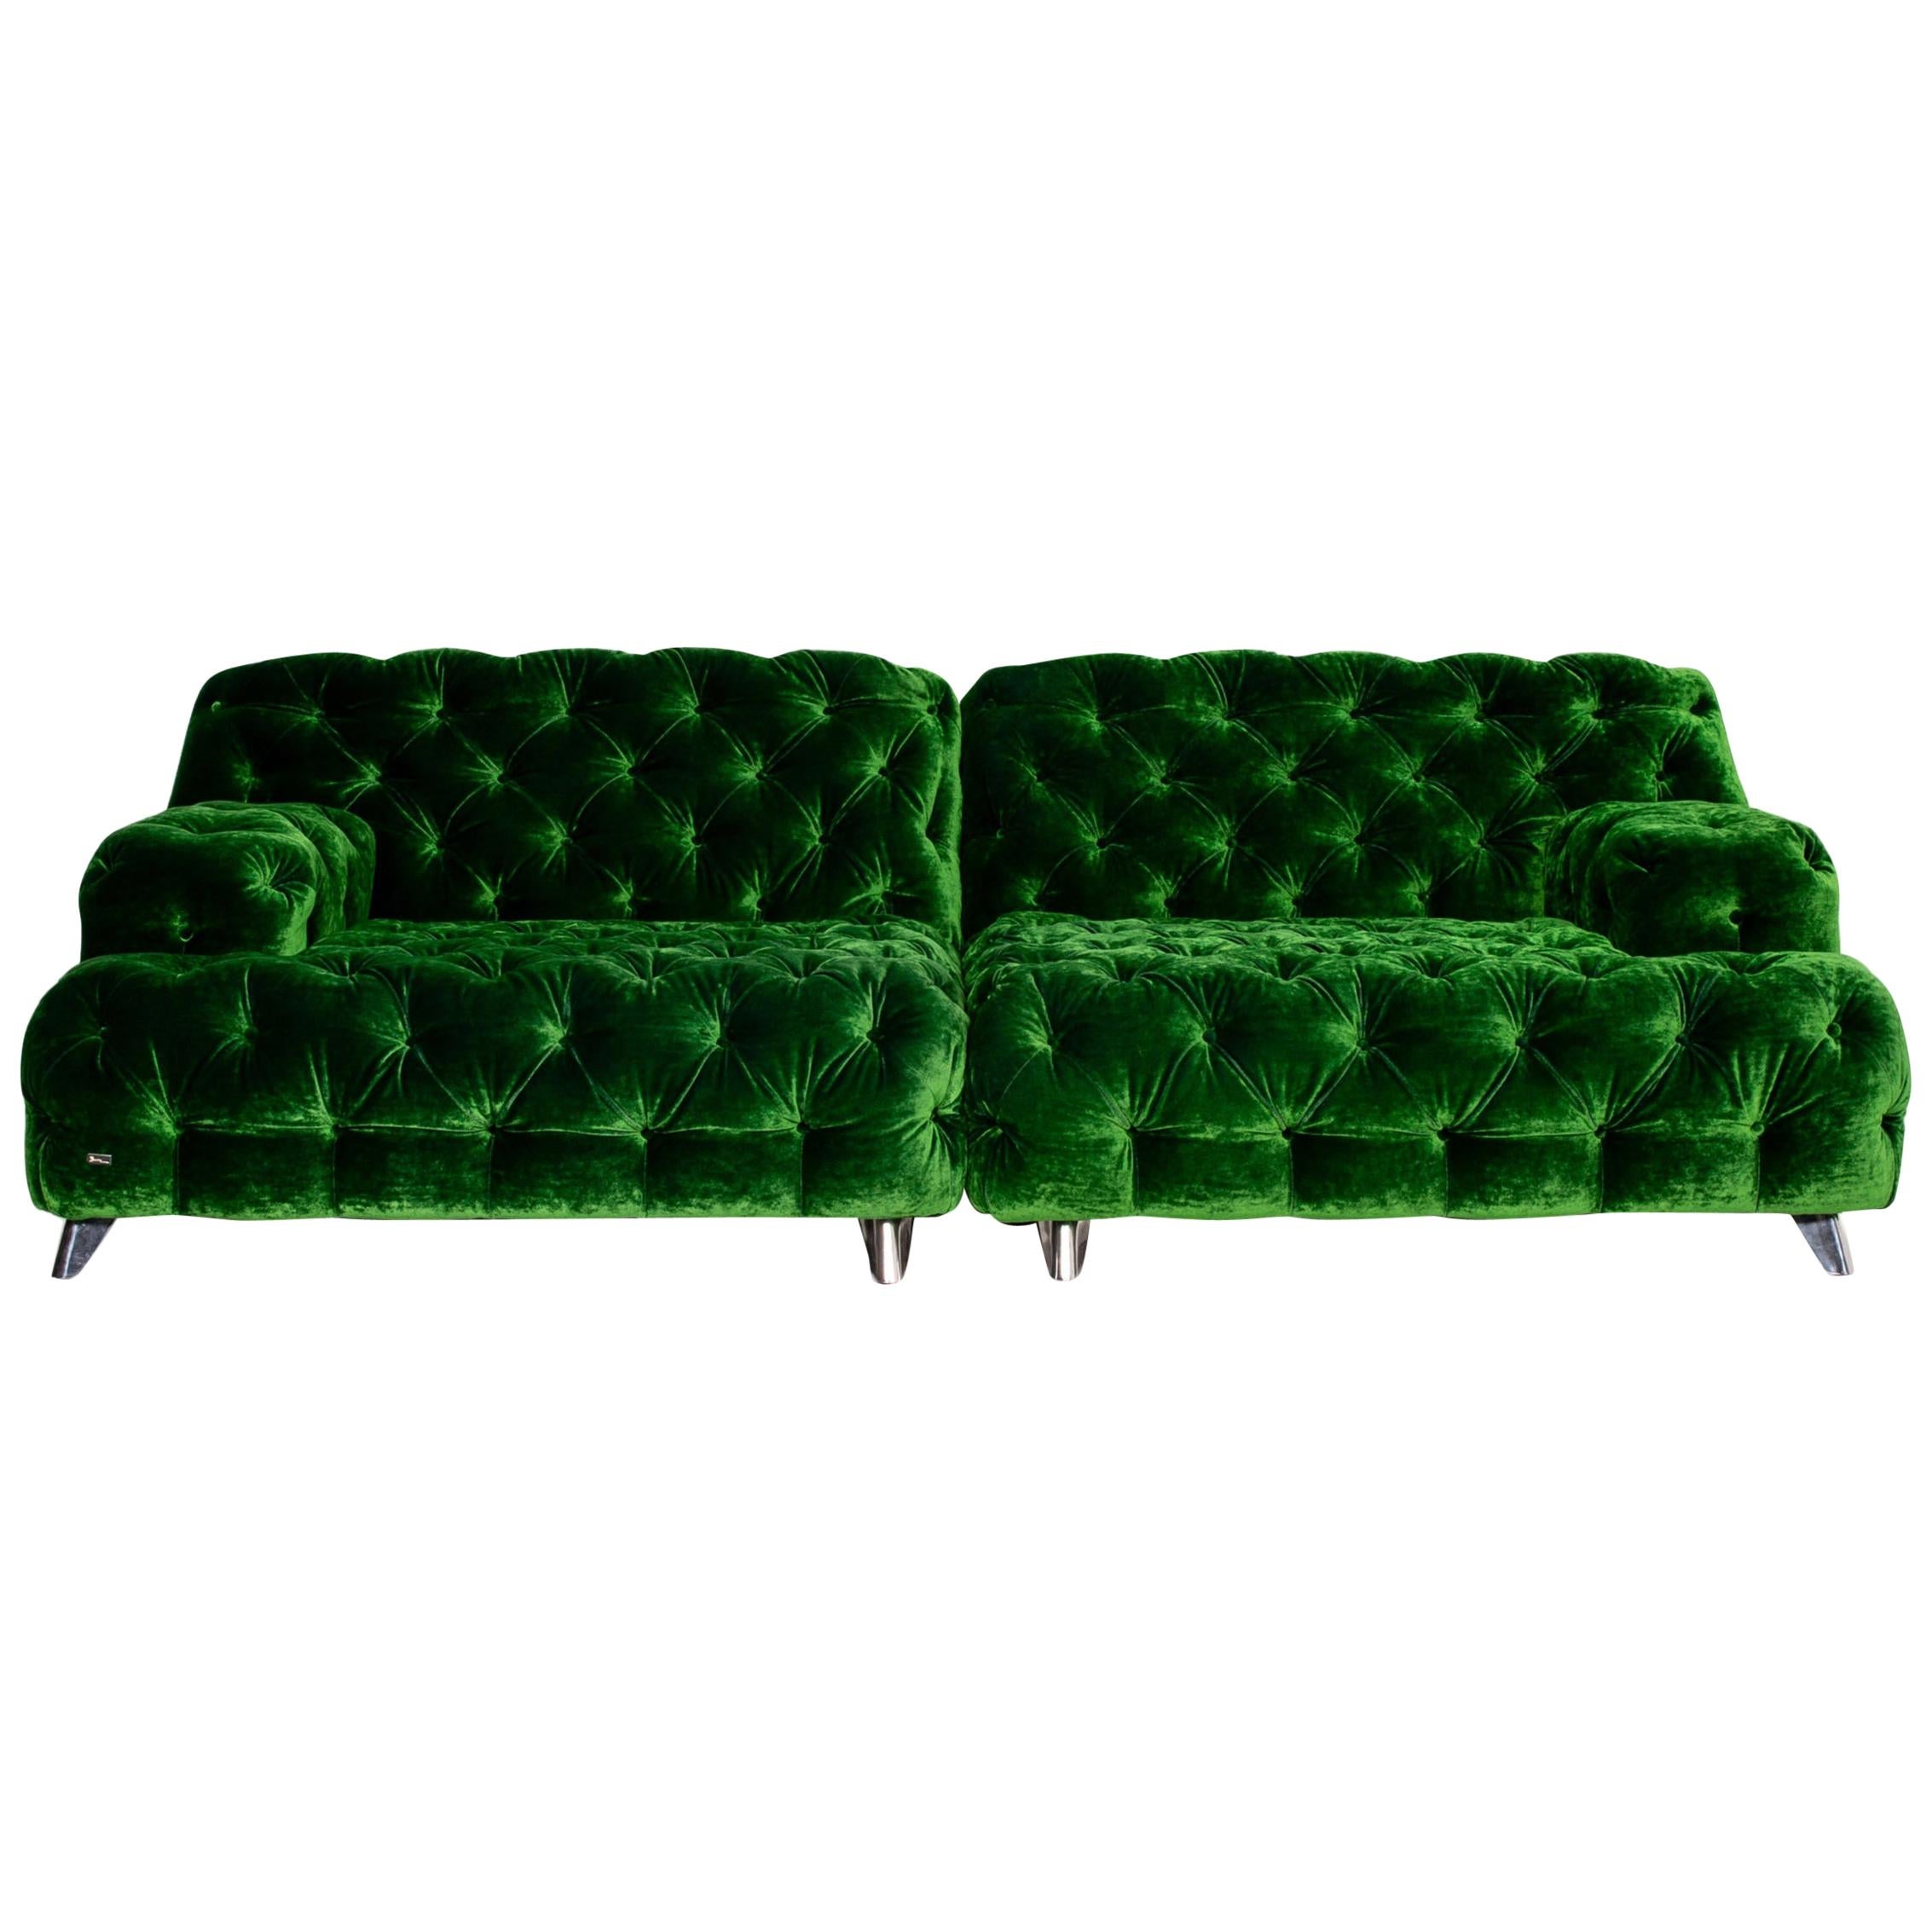 Bretz Cocoa Island Velvet Fabric Sofa Green Four-Seat Couch